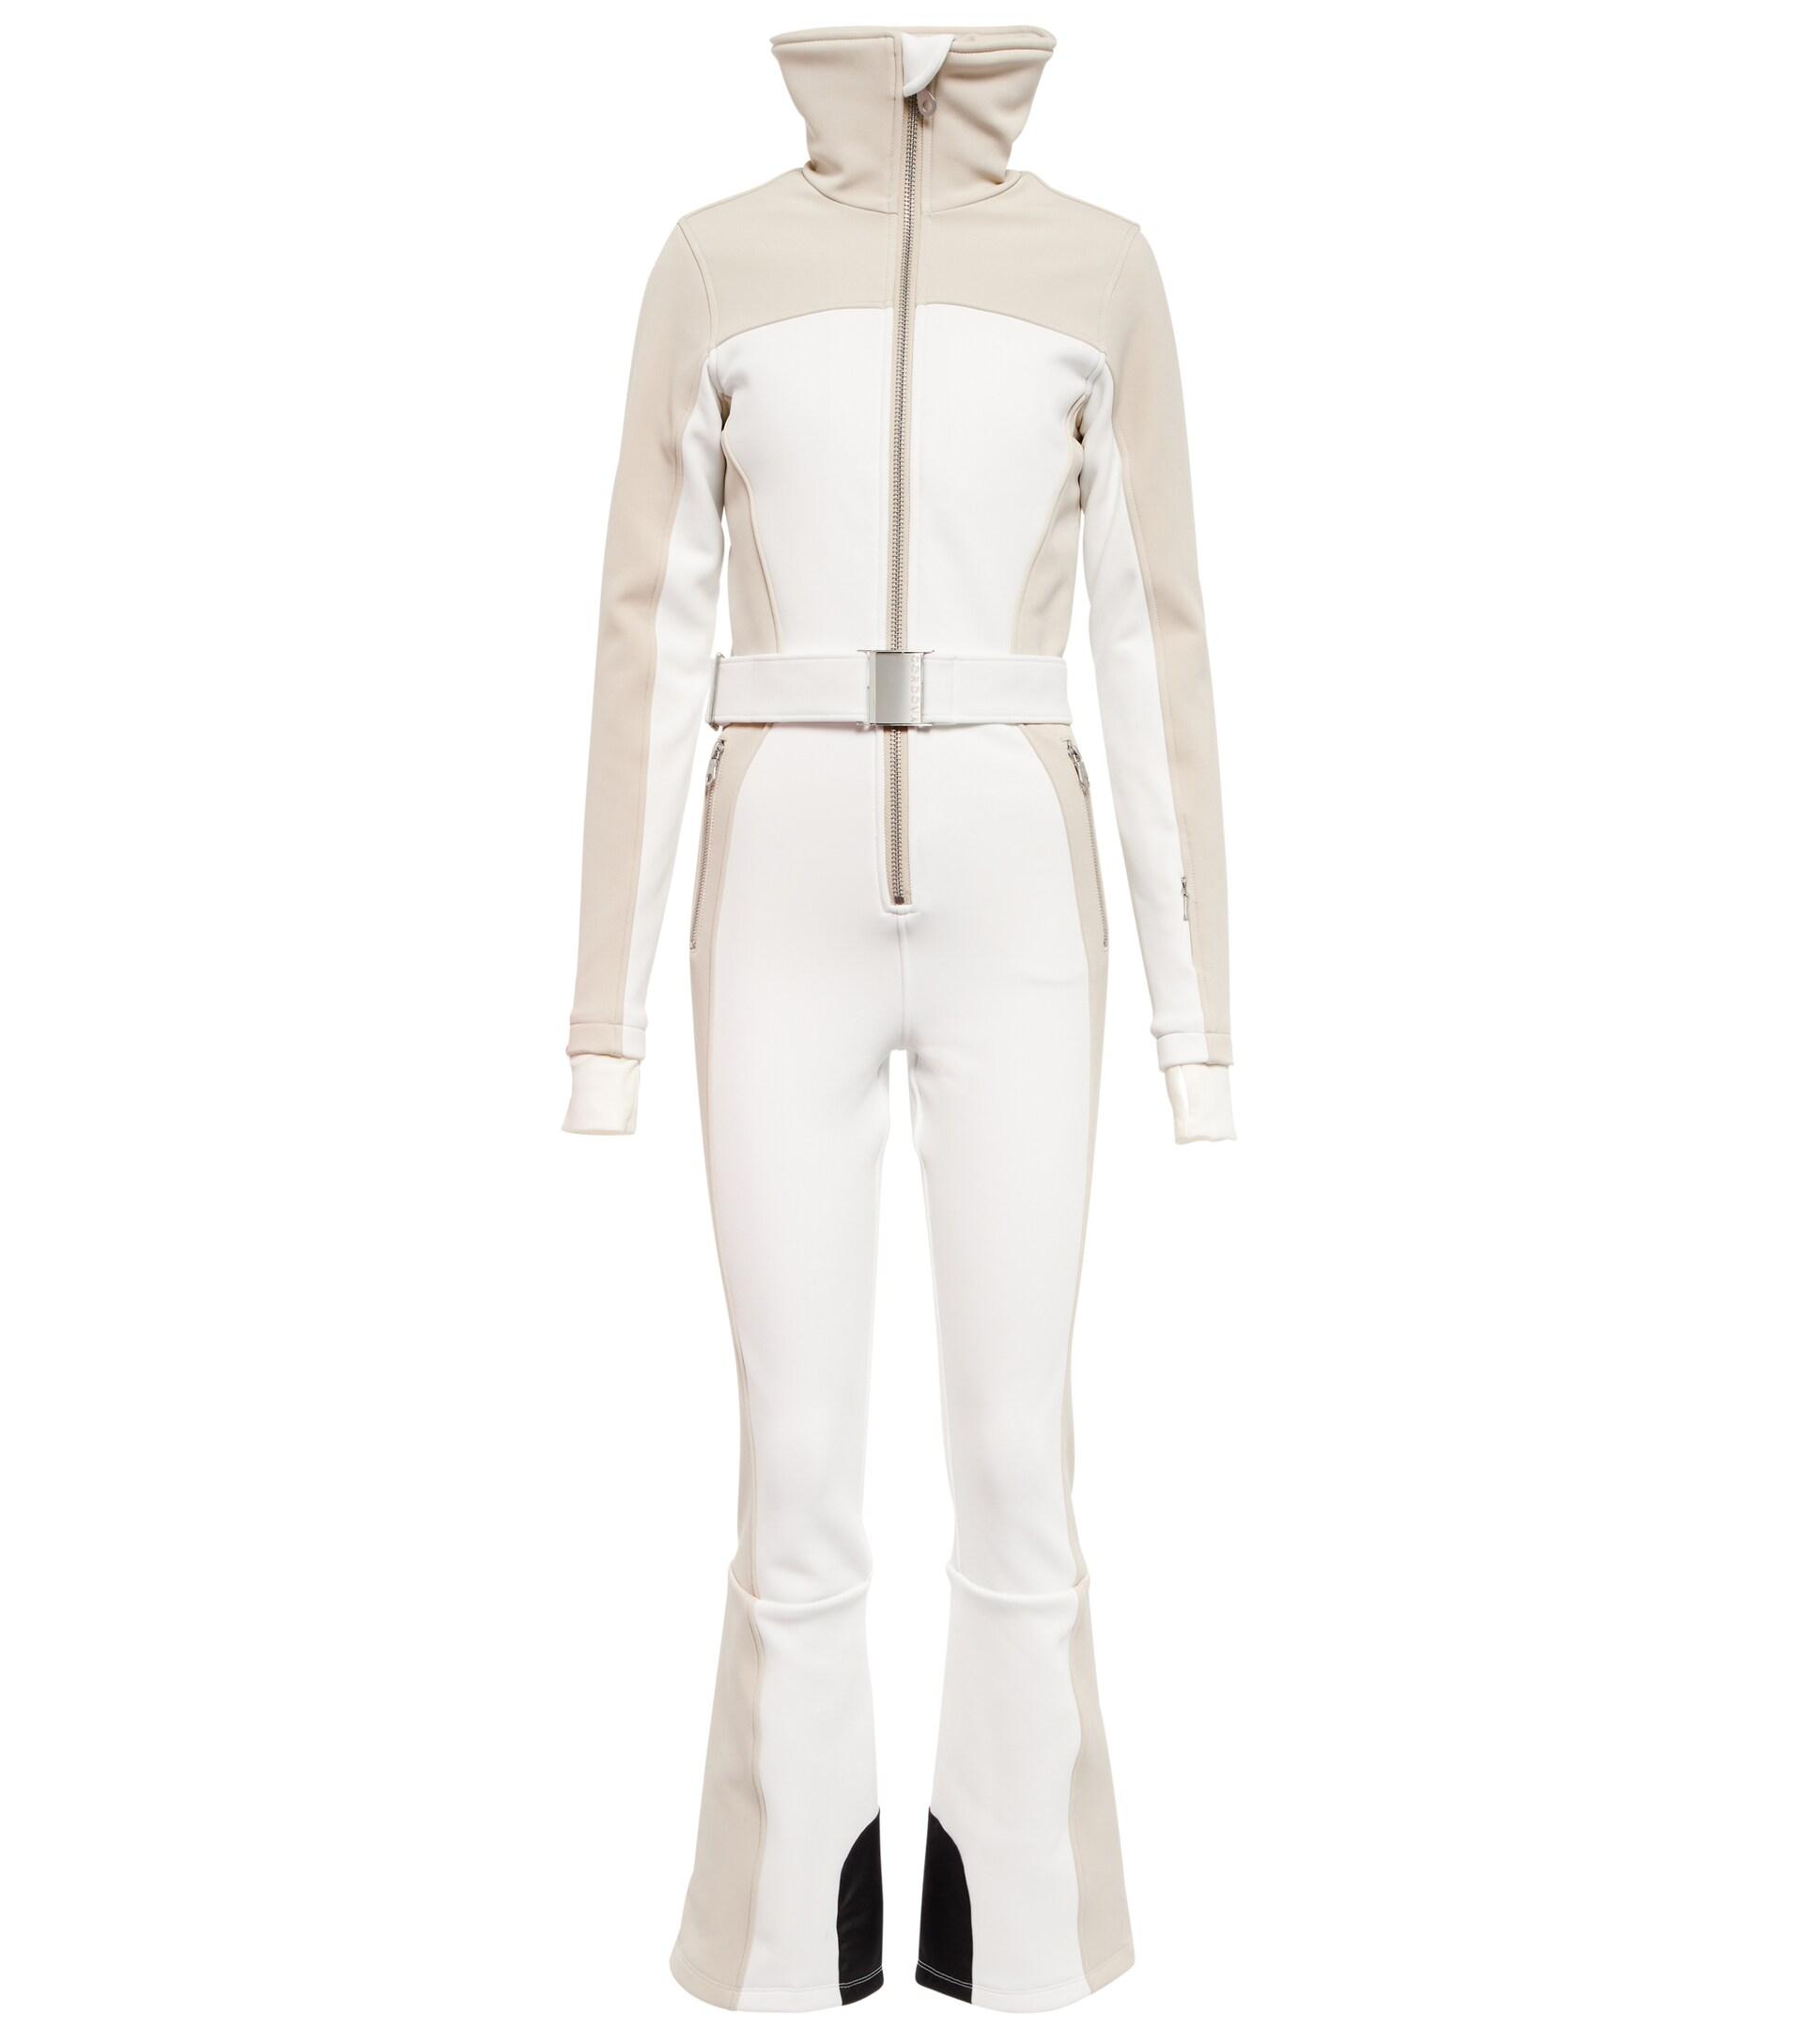 CORDOVA Badia Ski Suit in White | Lyst